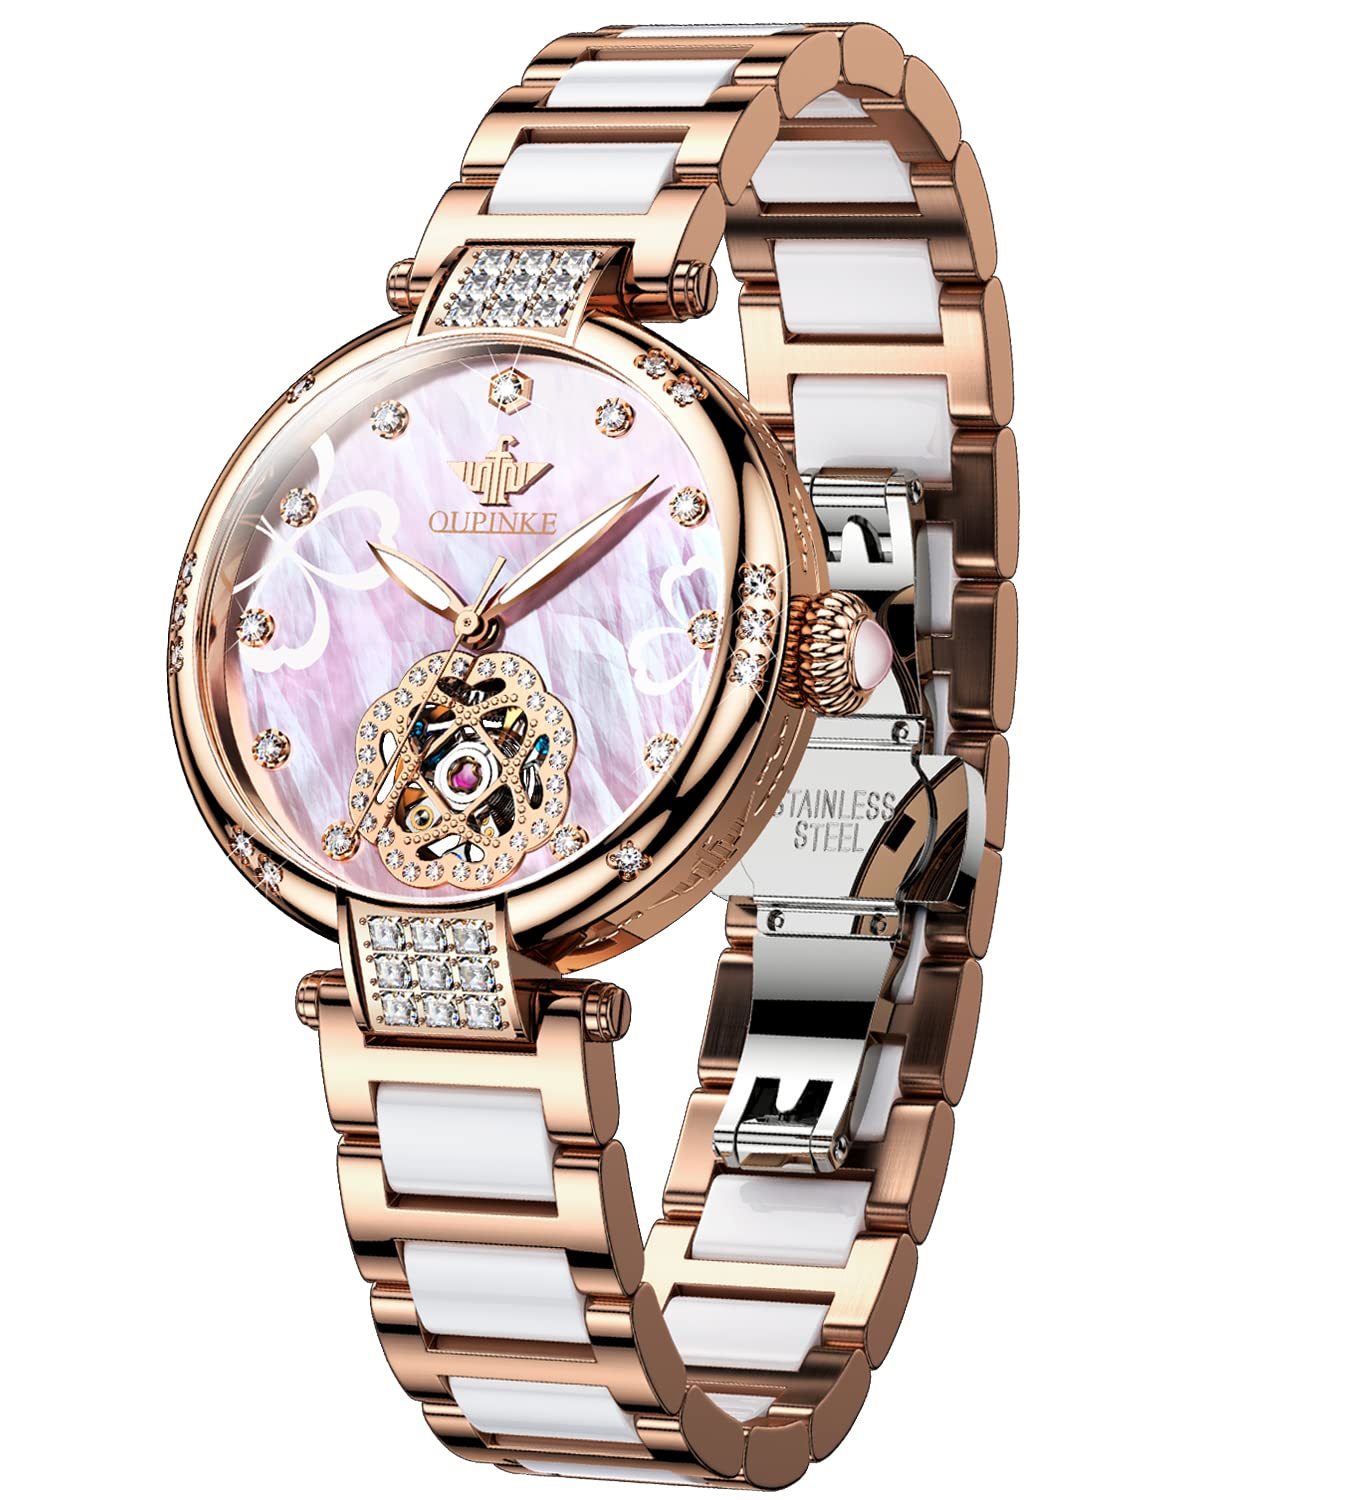 OUPINKE Watches for Women Mechanical Self Winding Dress Luxury Diamond Dial Rose Gold Ceramic Waterproof Luminous Ladies Wrist Watch Gift Set